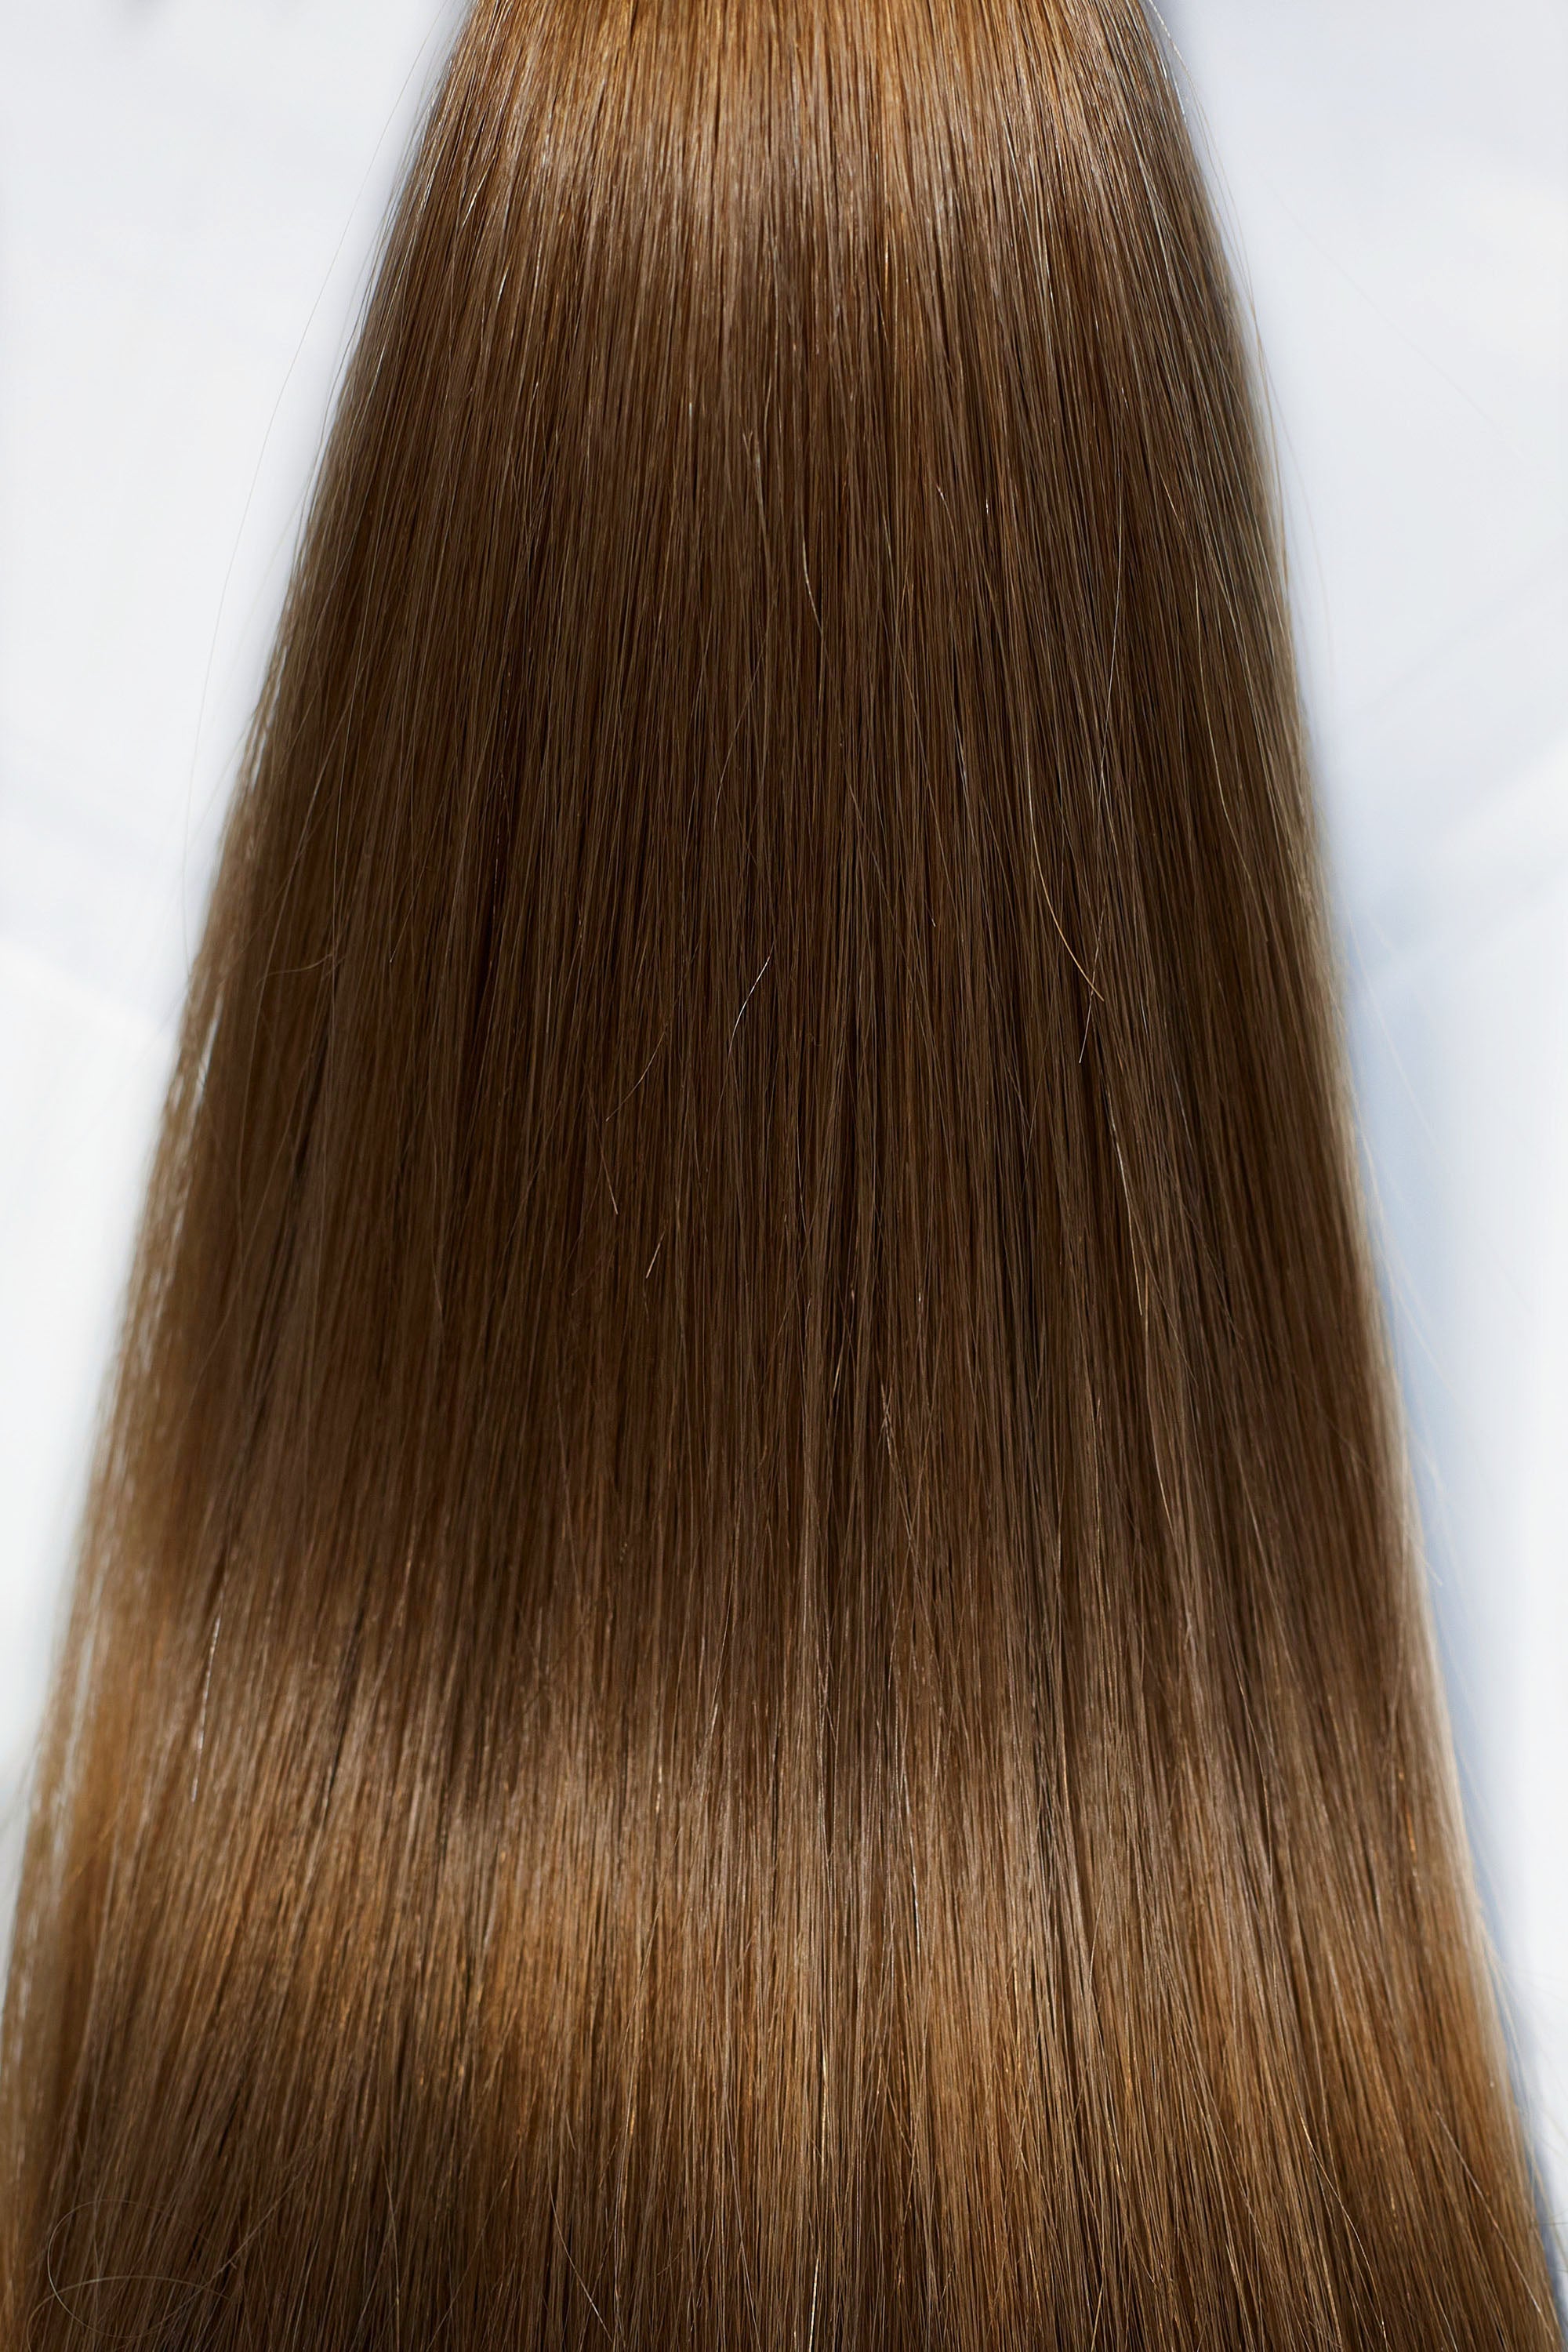 Behair professional Keratin Tip "Premium" 24" (60cm) Natural Straight Chestnut #6 - 25g (Standart - 0.7g each pcs) hair extensions